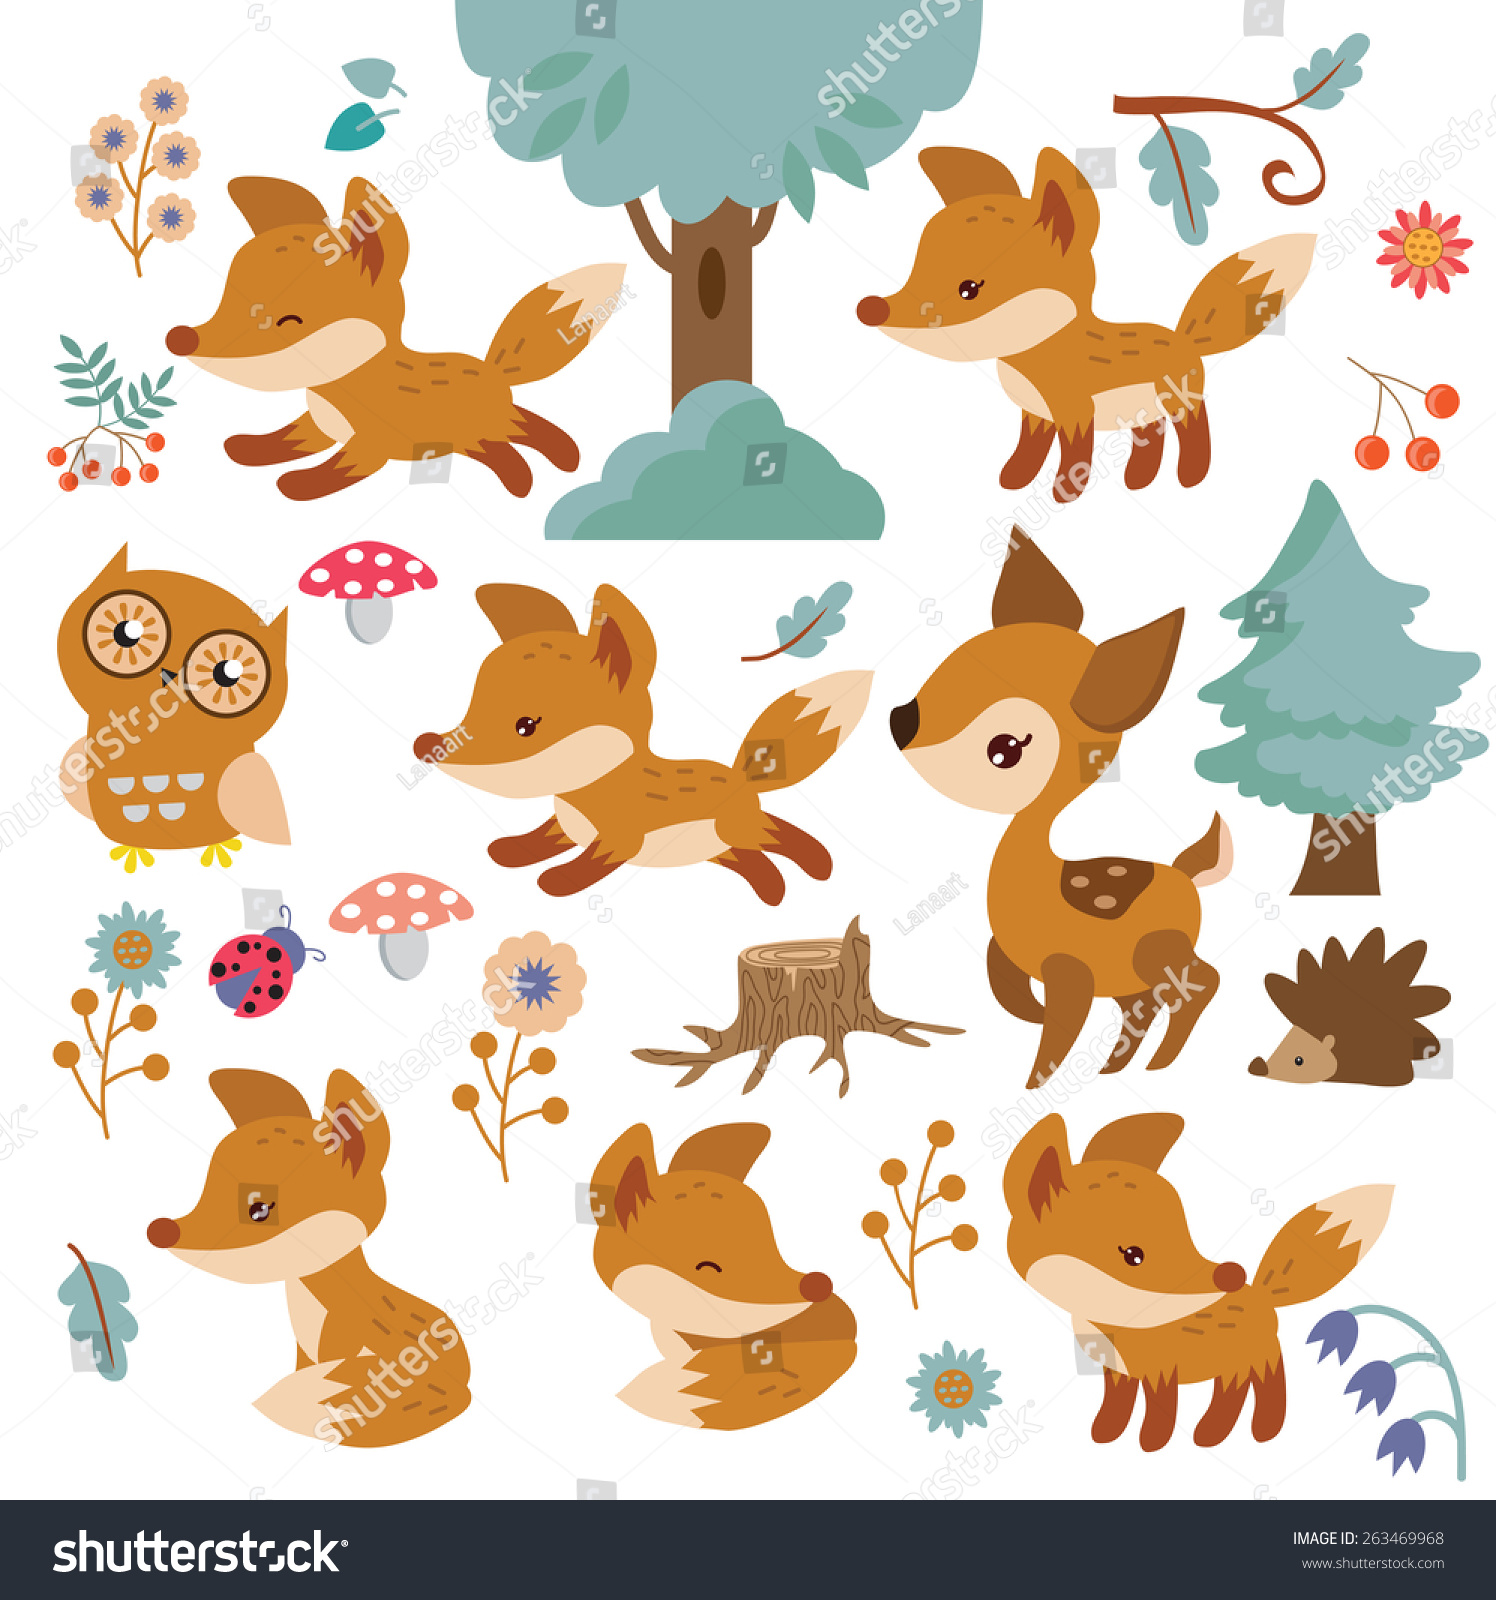 Forest Animal Vector Illustration - 263469968 : Shutterstock